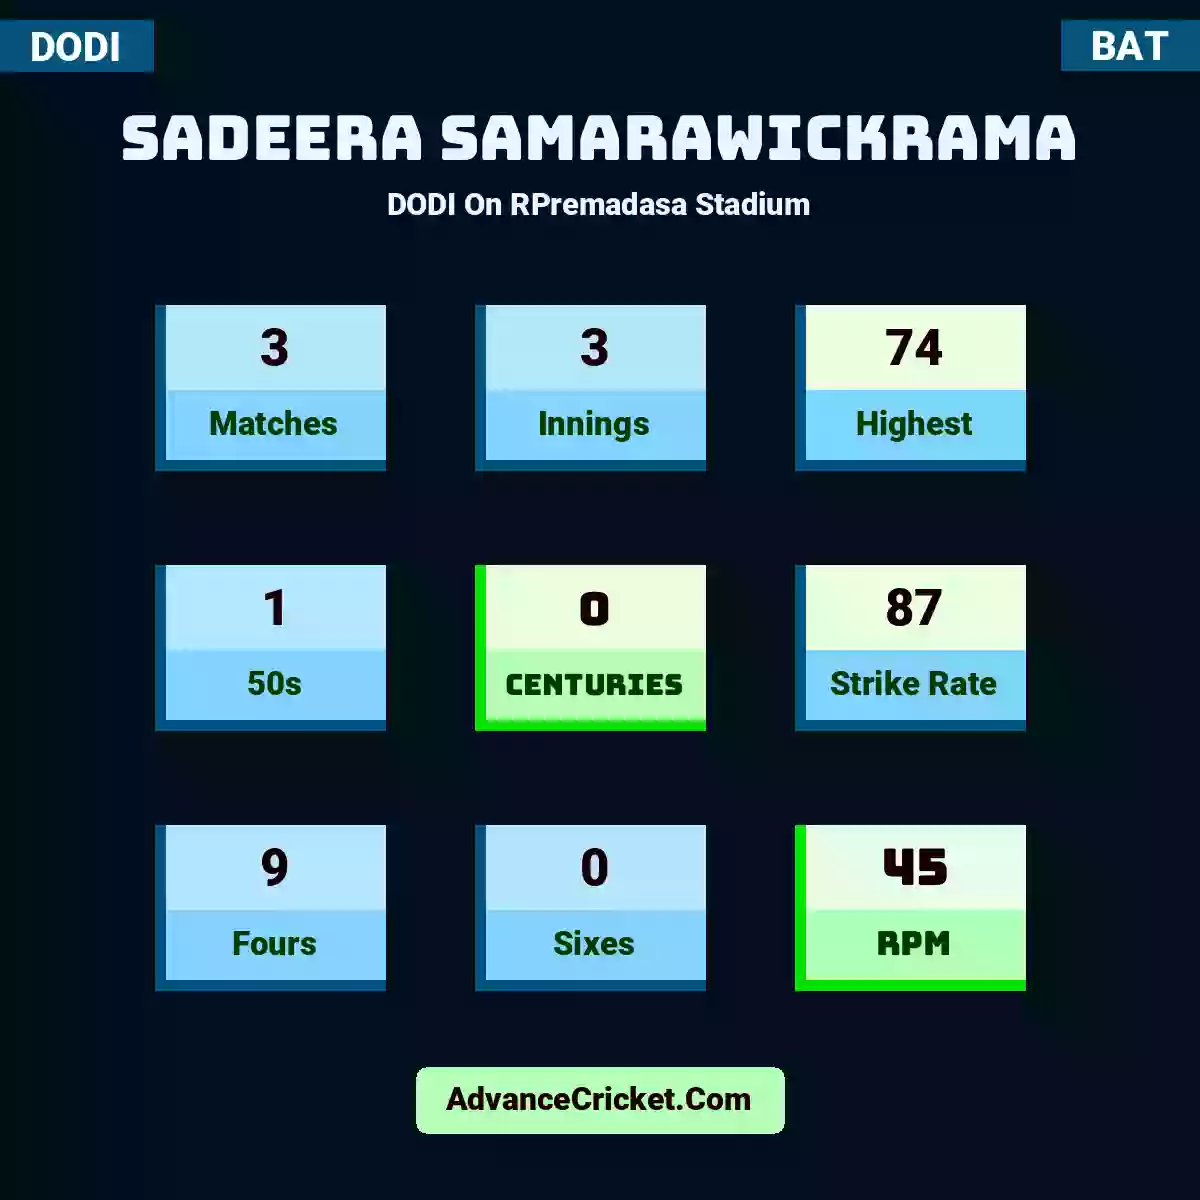 Sadeera Samarawickrama DODI  On RPremadasa Stadium, Sadeera Samarawickrama played 3 matches, scored 74 runs as highest, 1 half-centuries, and 0 centuries, with a strike rate of 87. S.Samarawickrama hit 9 fours and 0 sixes, with an RPM of 45.